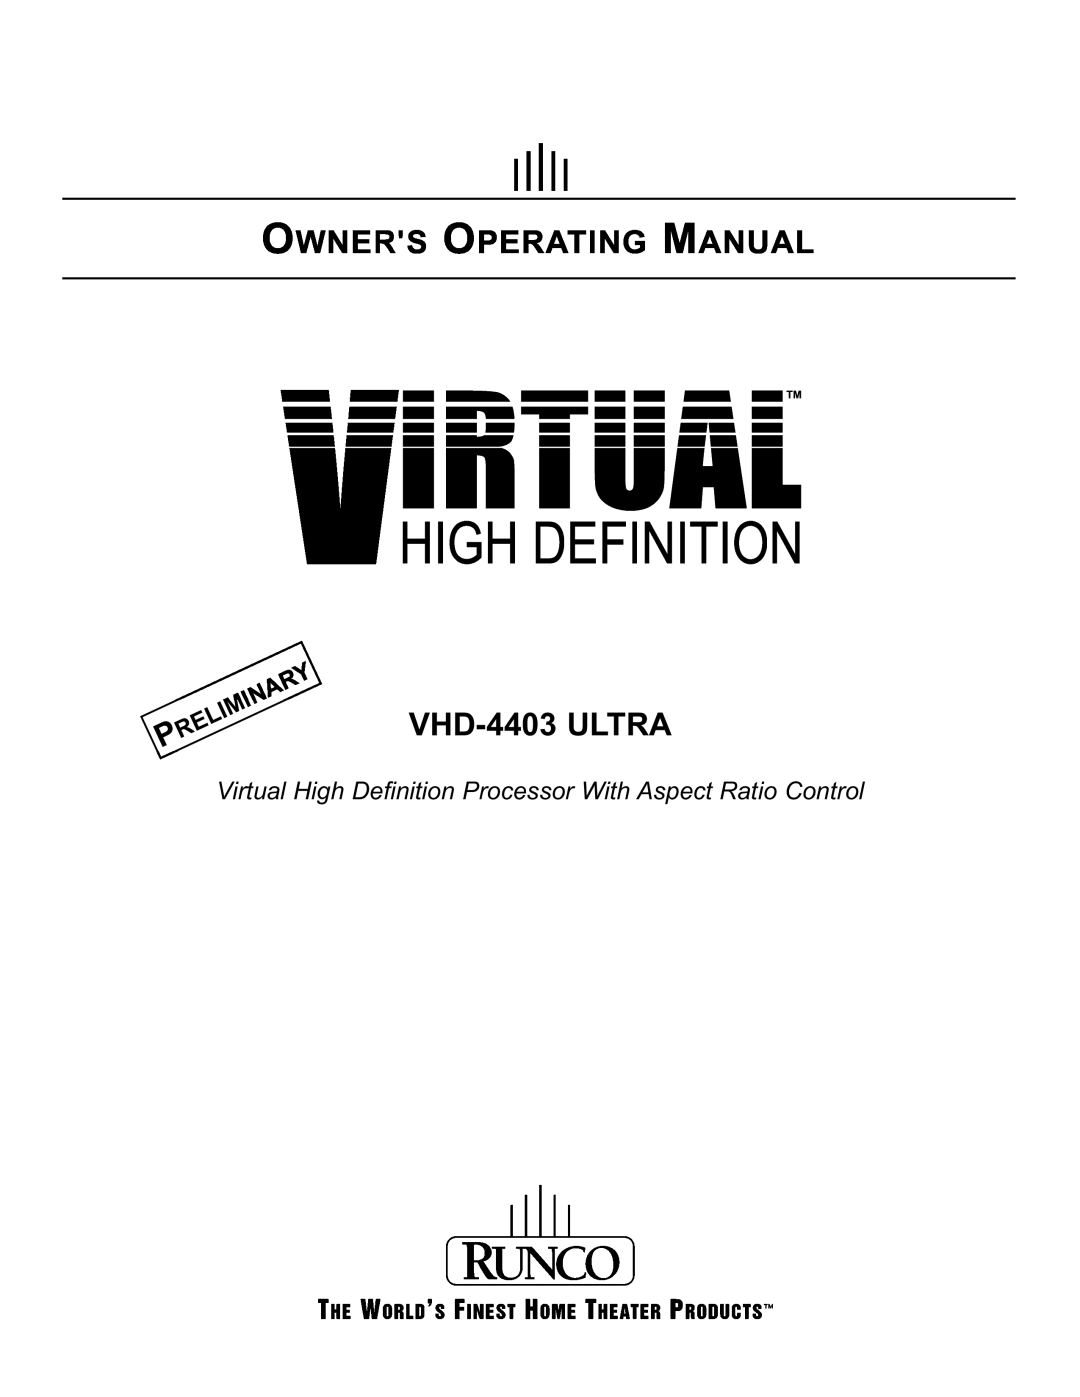 Runco virtual high definition processor with aspect ratio control, VHD-4403 Ultra manual VHD-4403ULTRA, Y Preliminar 